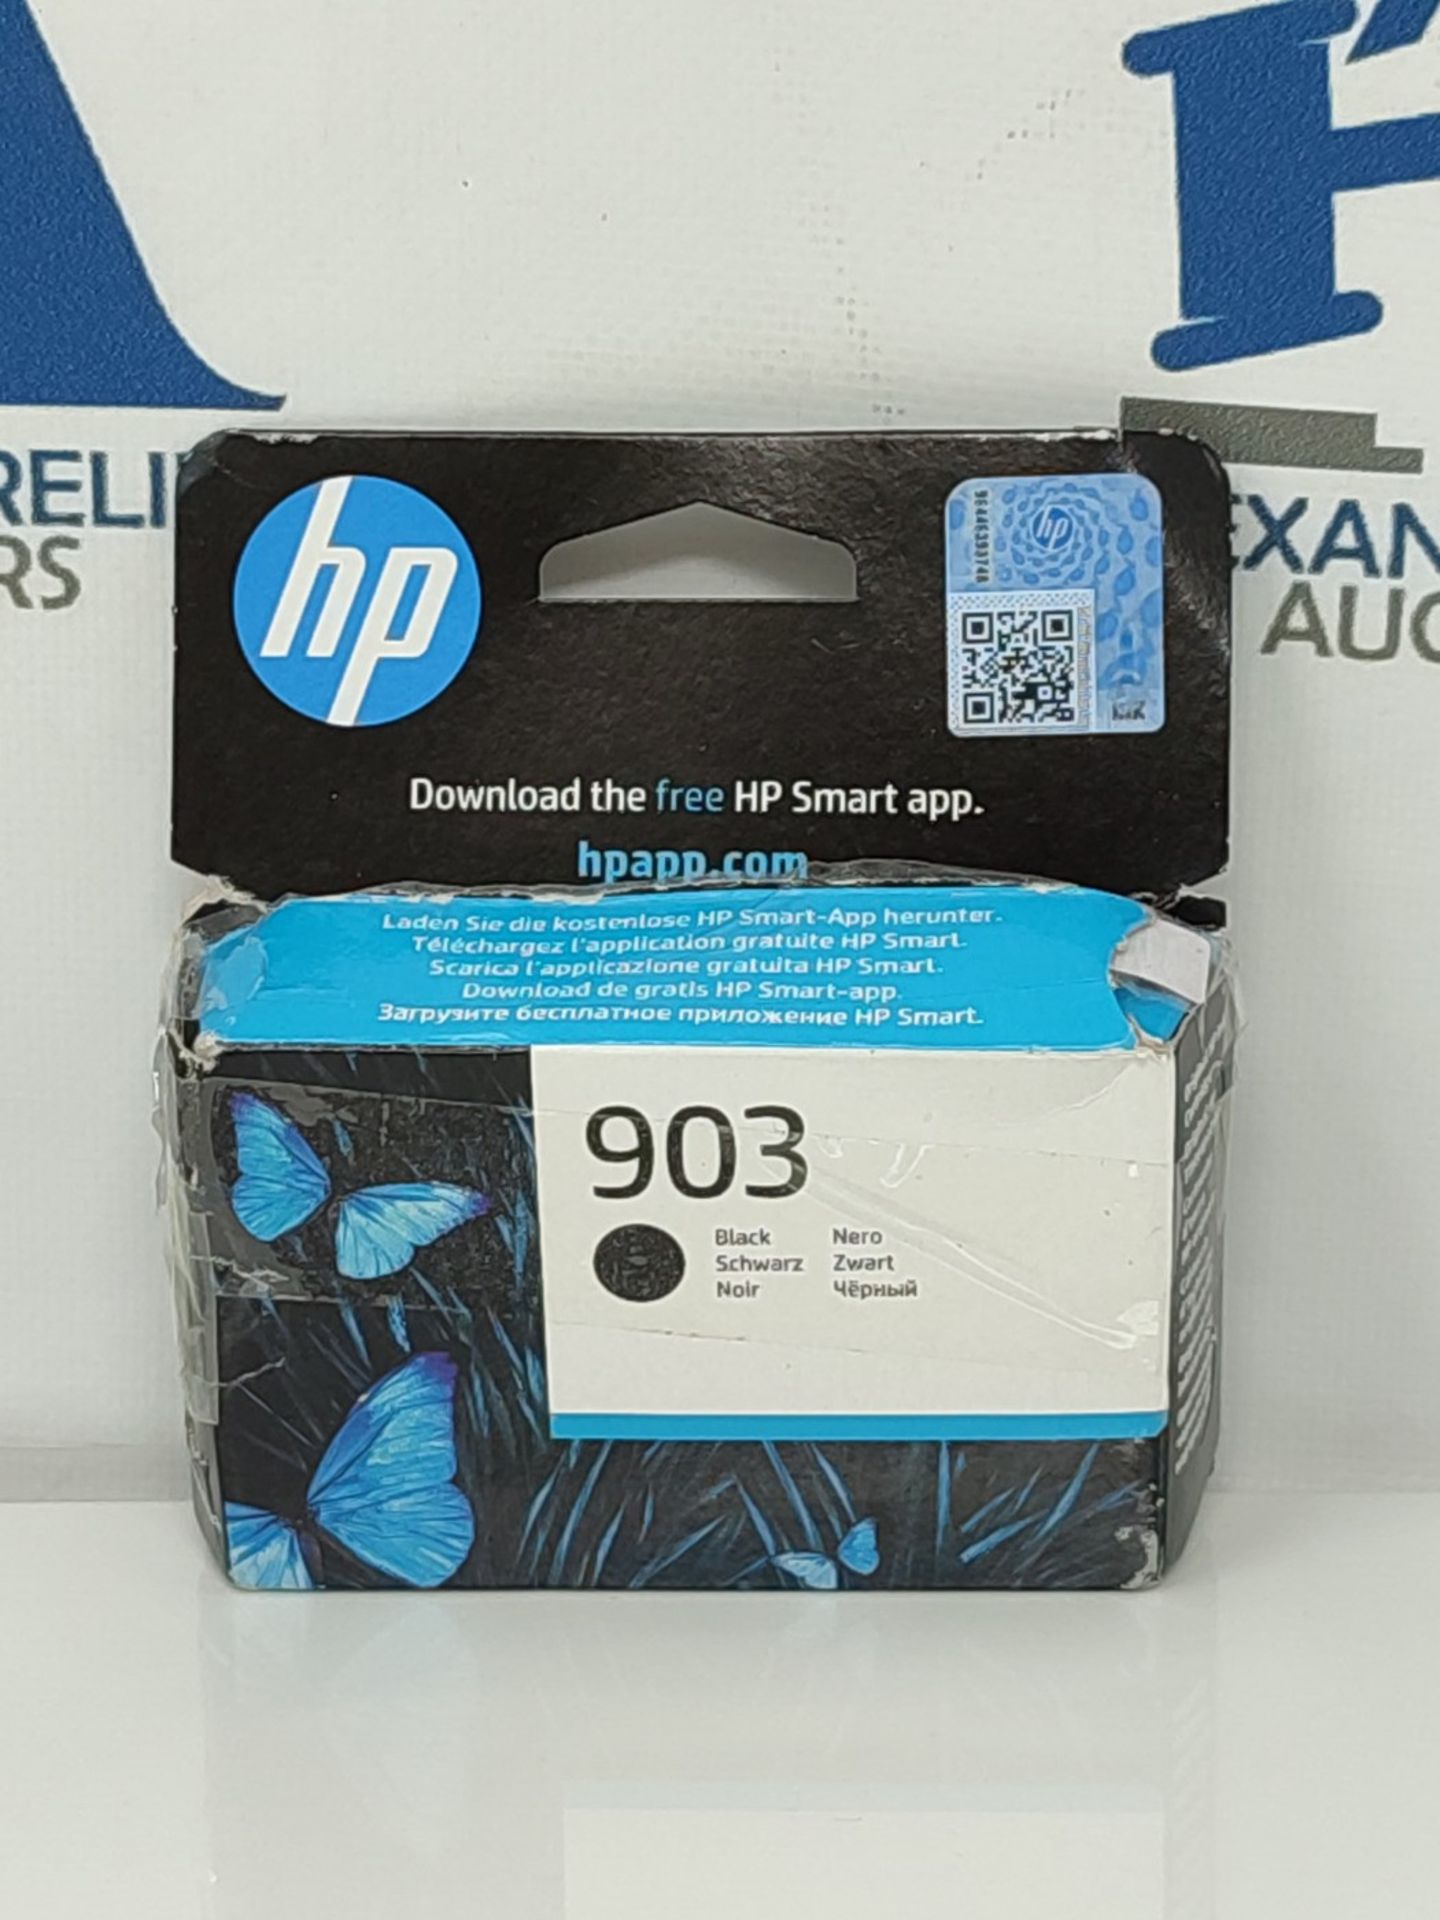 HP 903 Ink Cartridge Black 300 Pages - Image 2 of 3